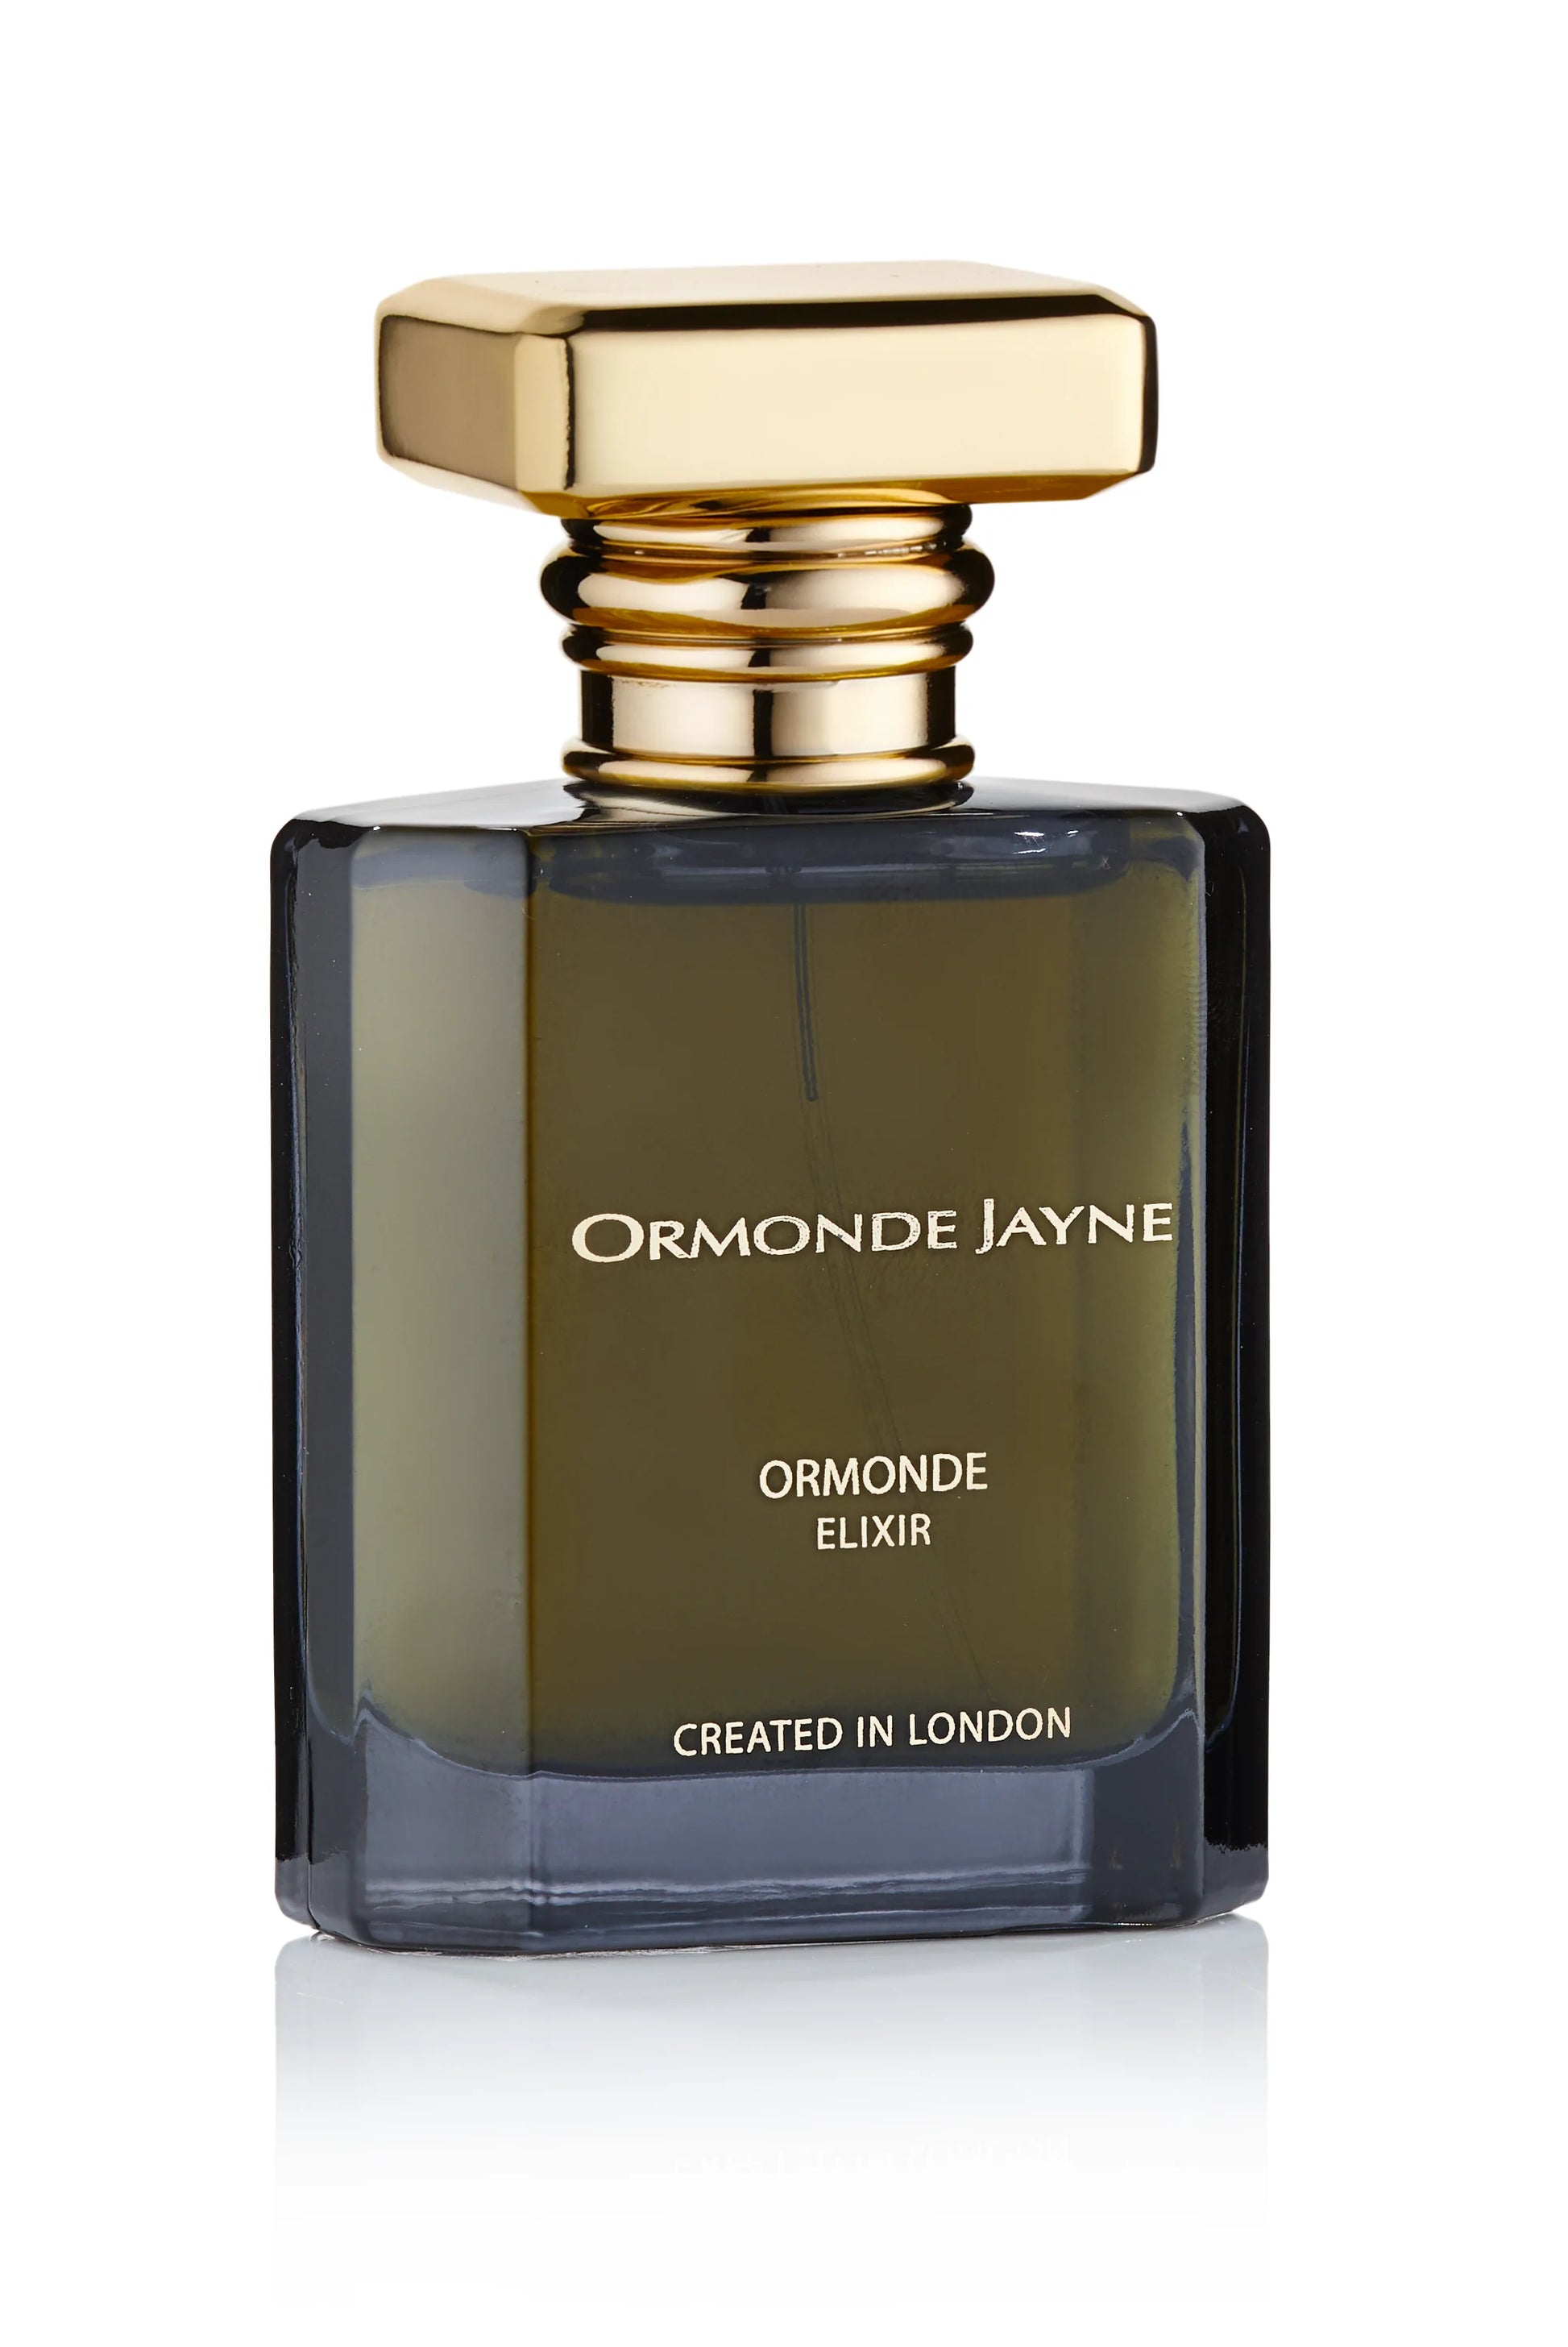 Ormonde Jayne Ormonde Elixir 2ml 0.06 fl. oz offisiell duftprøve